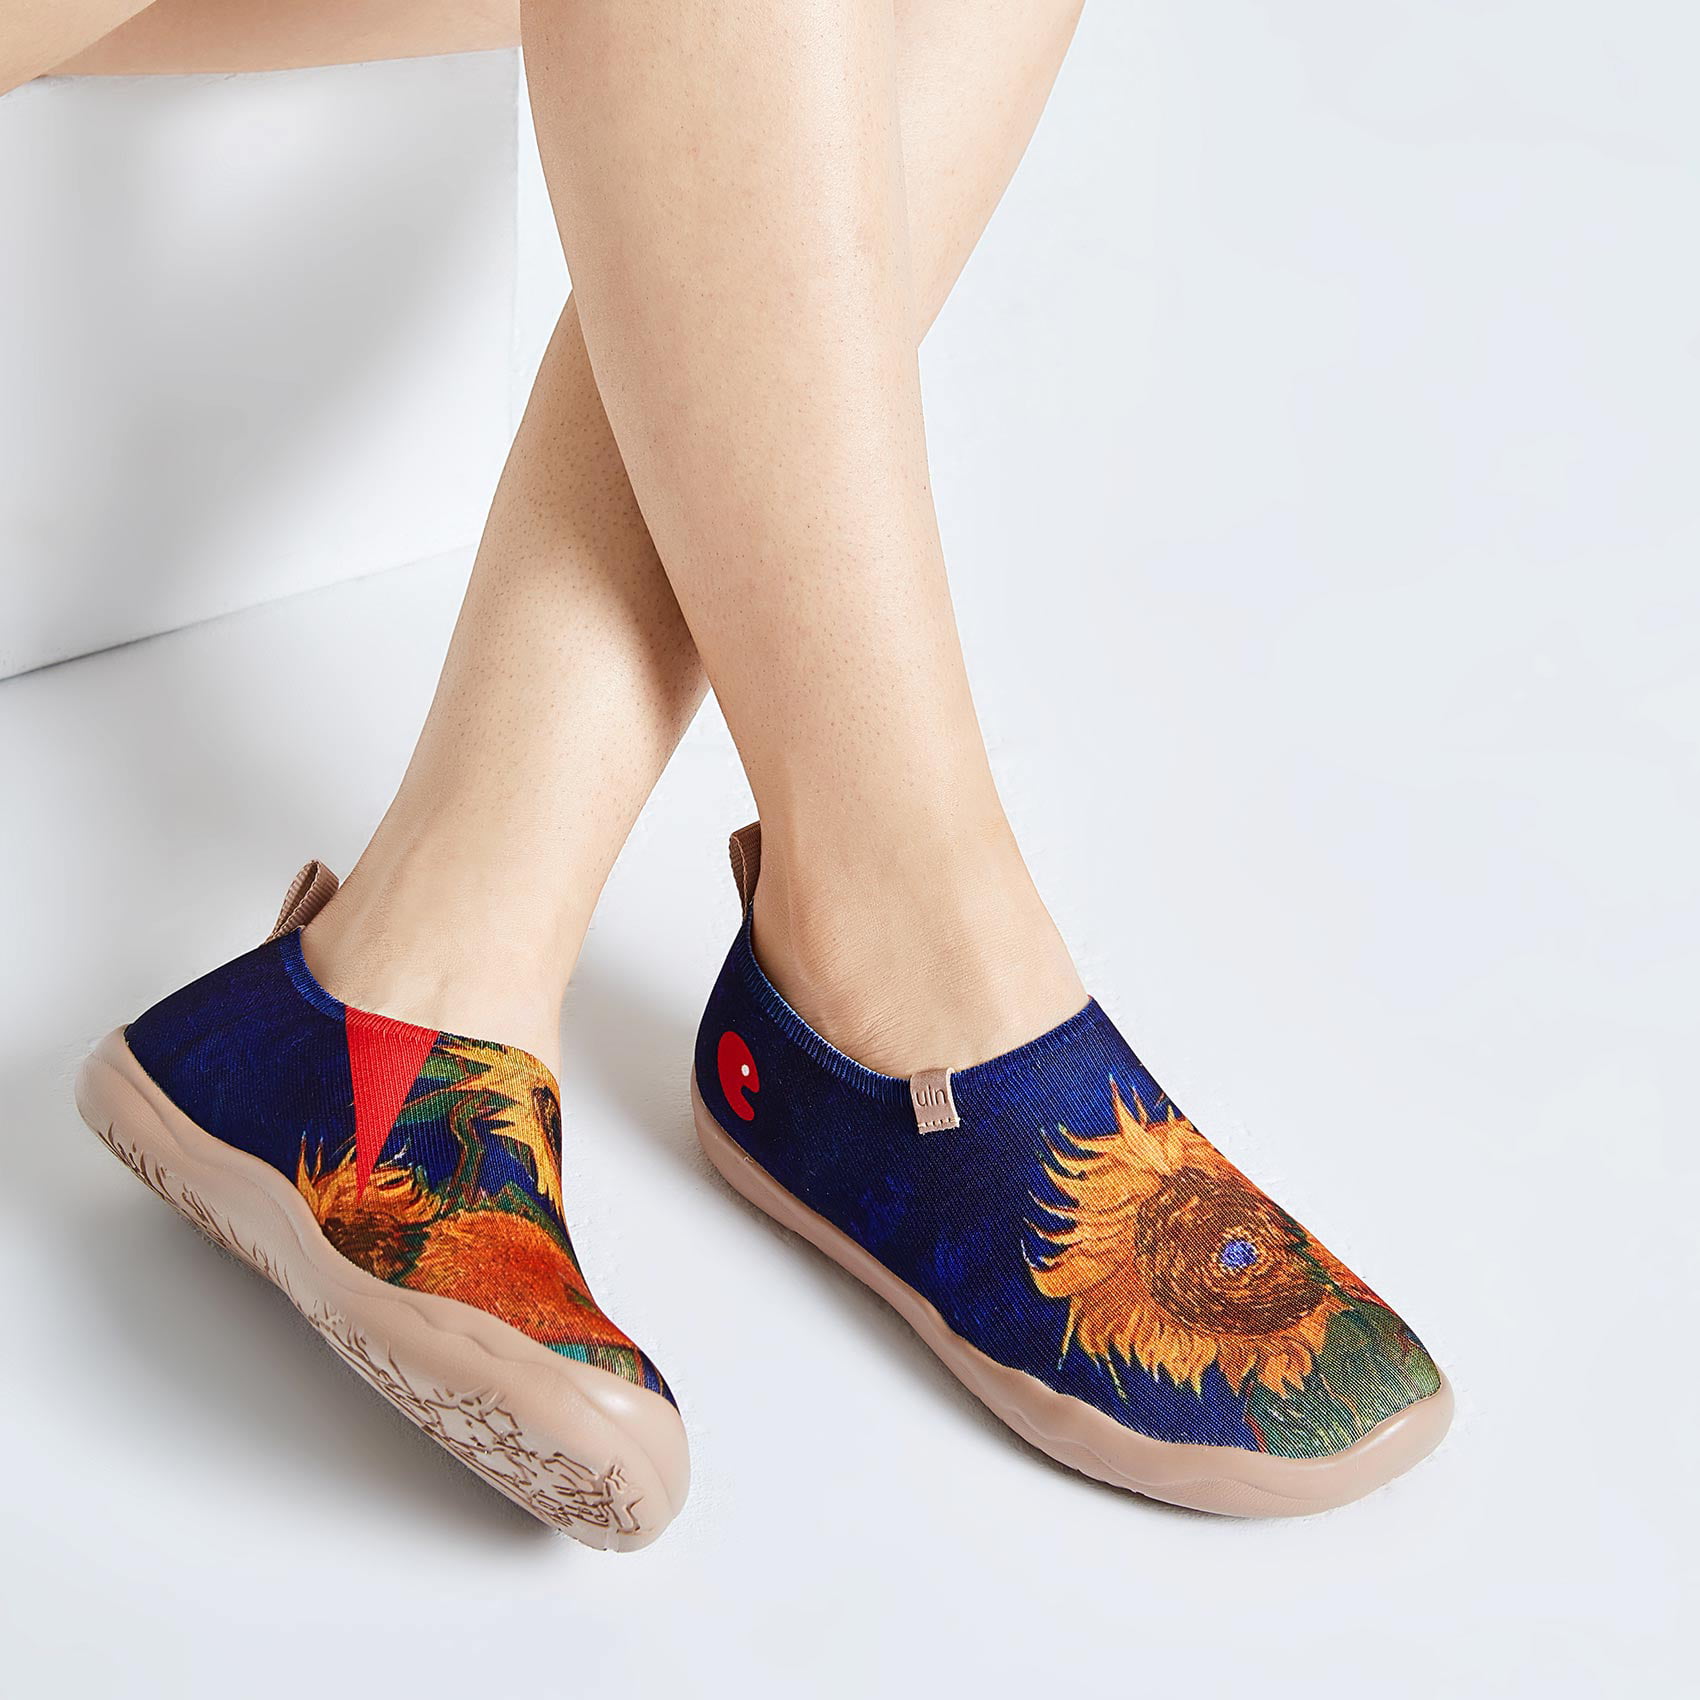 UIN Women's Flats Canvas Lightweight Slip Ons Sneakers Walking Casual Art Painted Travel Shoes Secret Garden